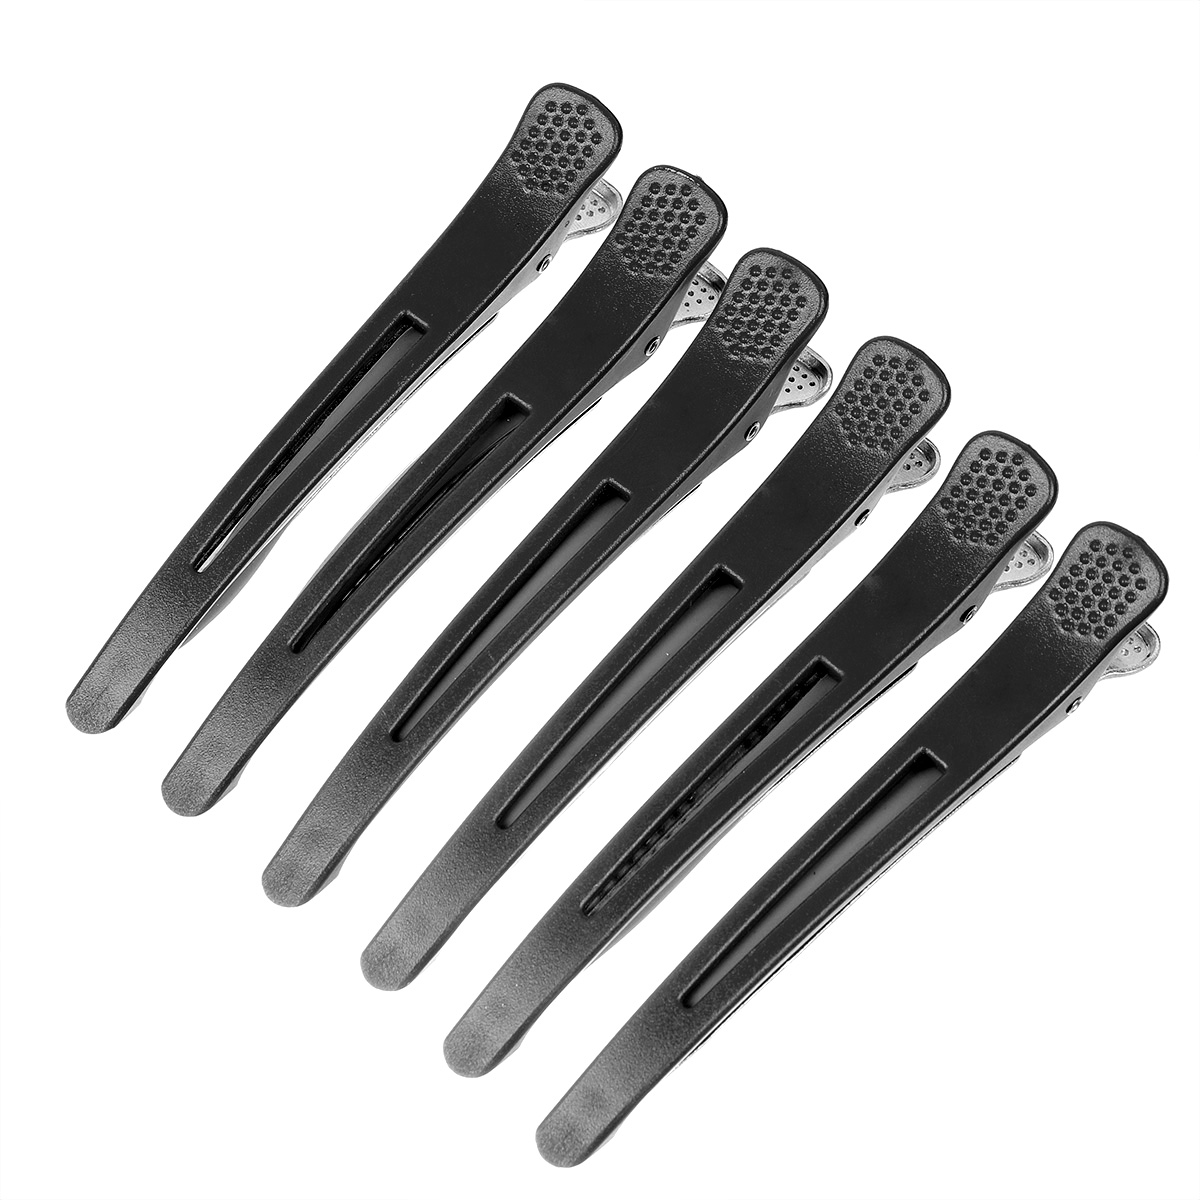 6 Pcs/set Alligator Hair Clips Flat Duckbill Hair Pin Sectioning Hair Styling Tool Braiding Clip Hairpins Accessory Salon Clips